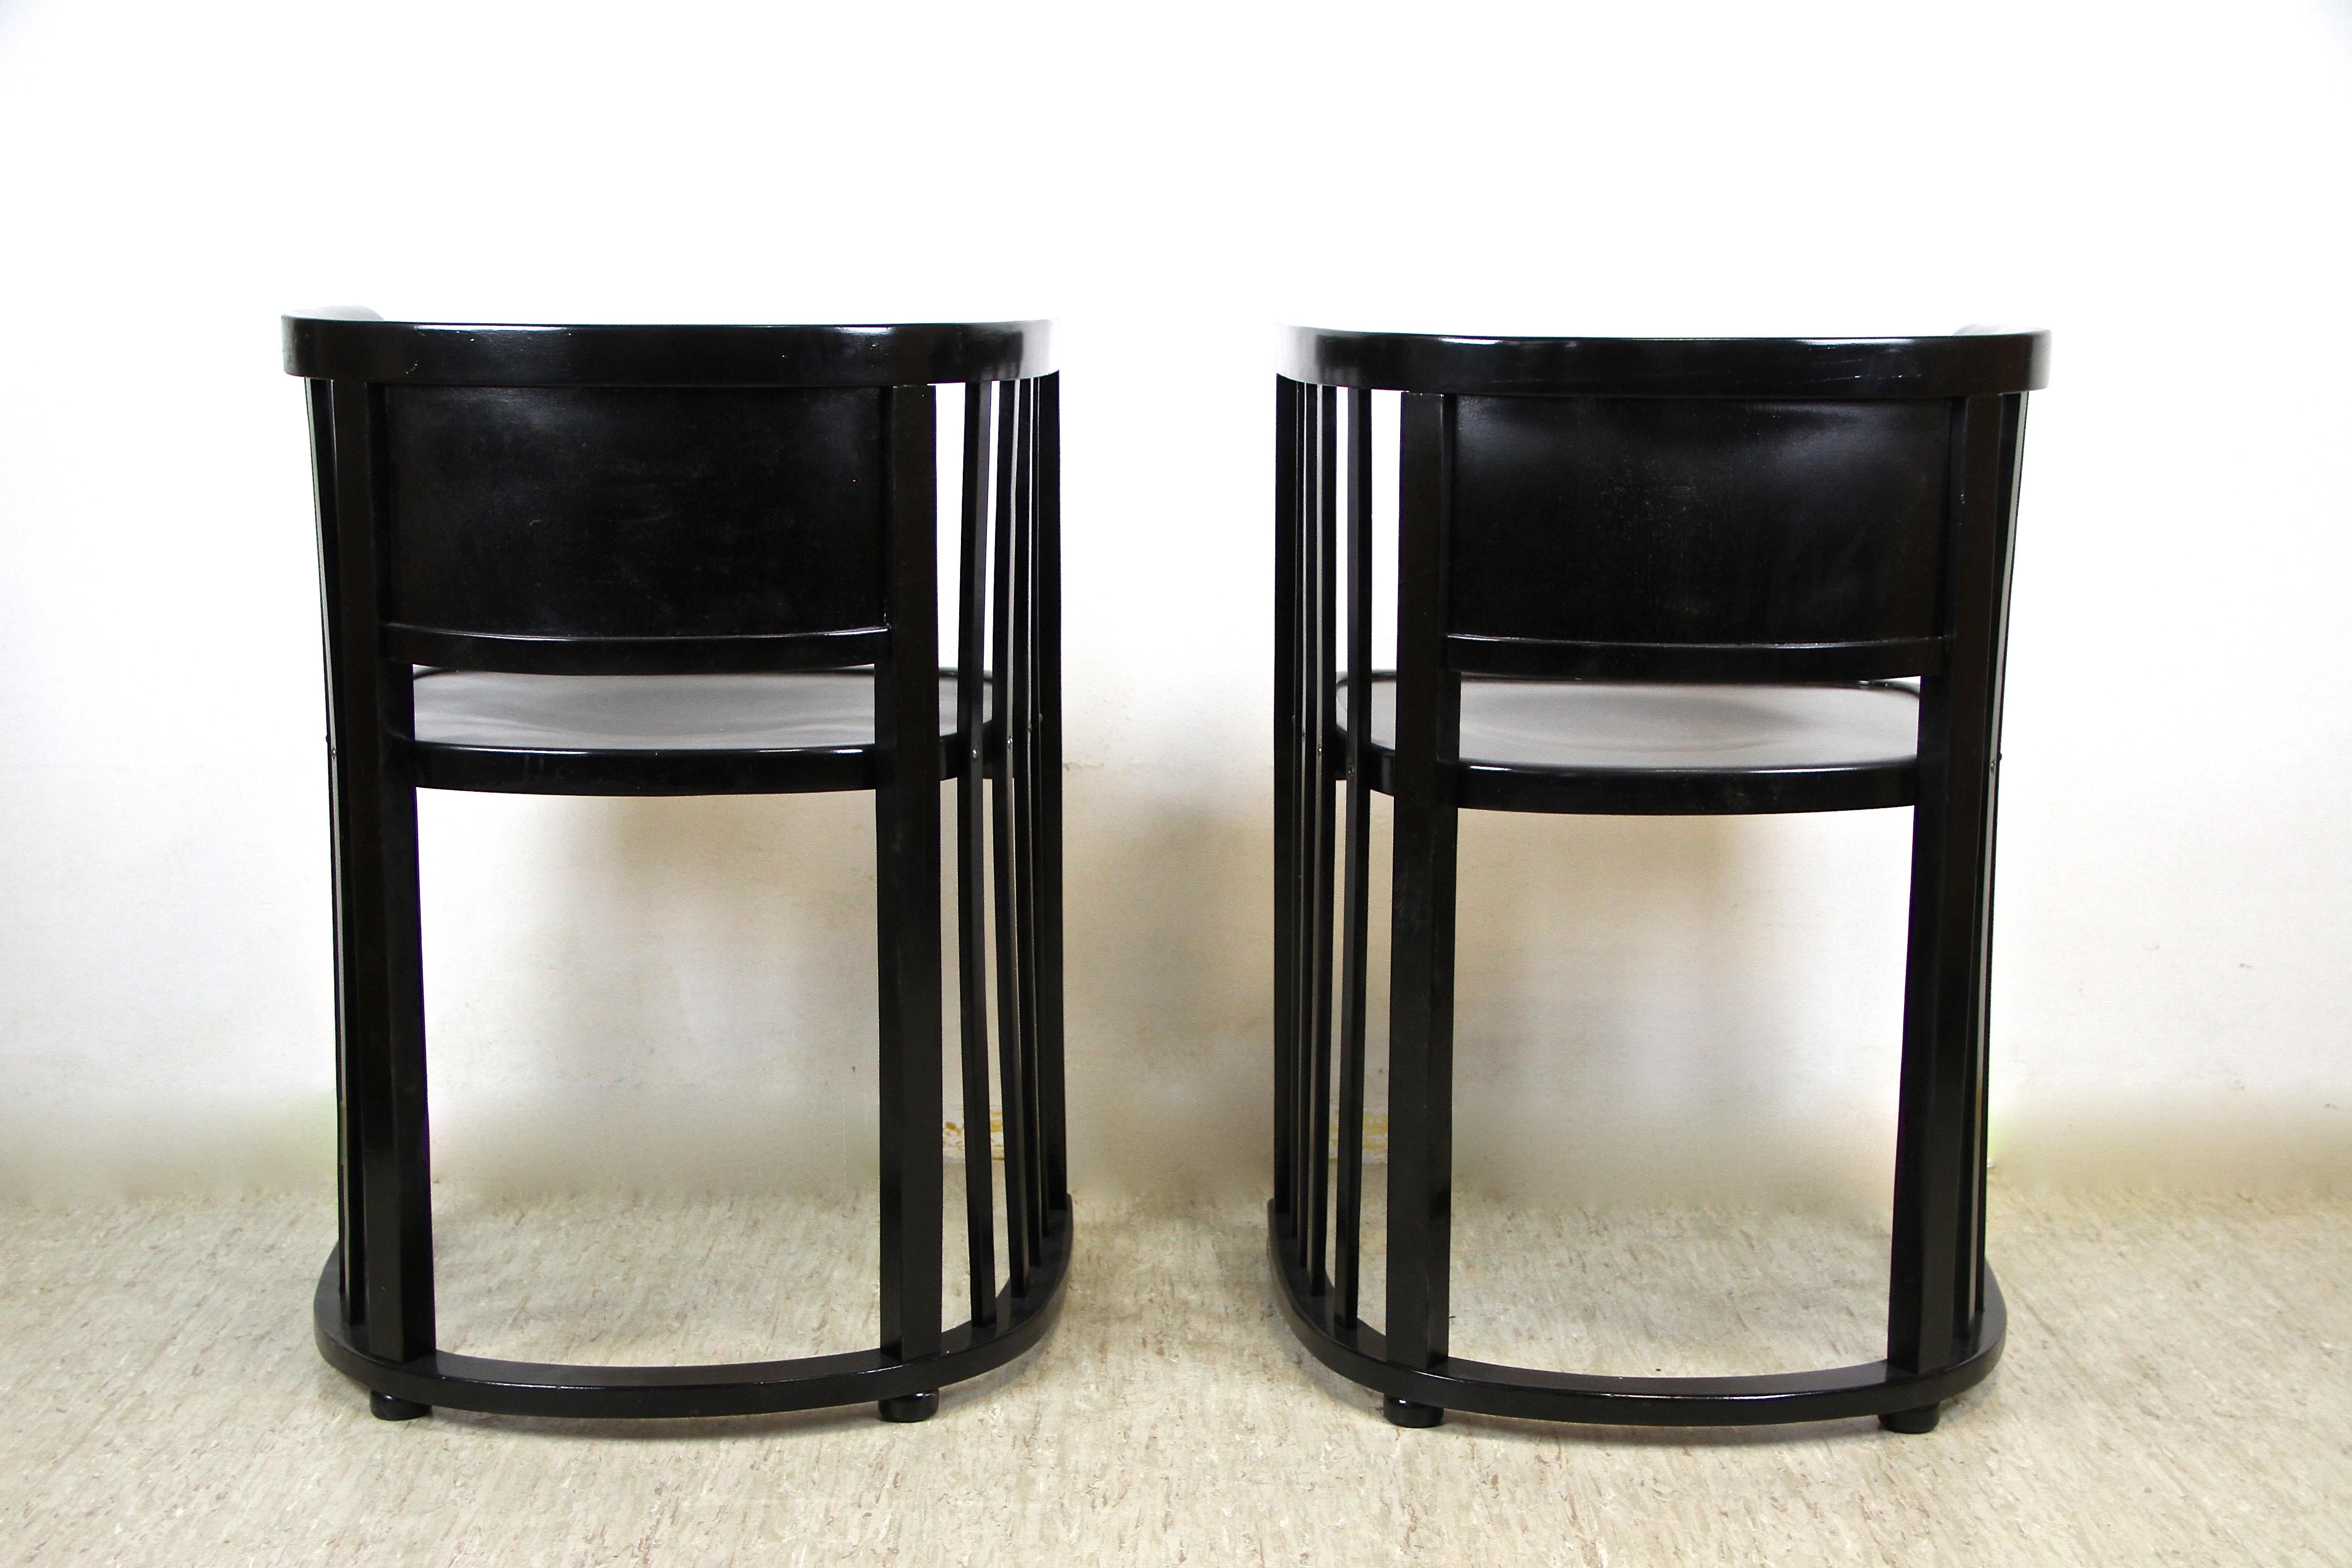 20th Century Bentwood Chairs Design Josef Hoffmann Attributed to J&J Kohn, Austria, ca. 1910 For Sale